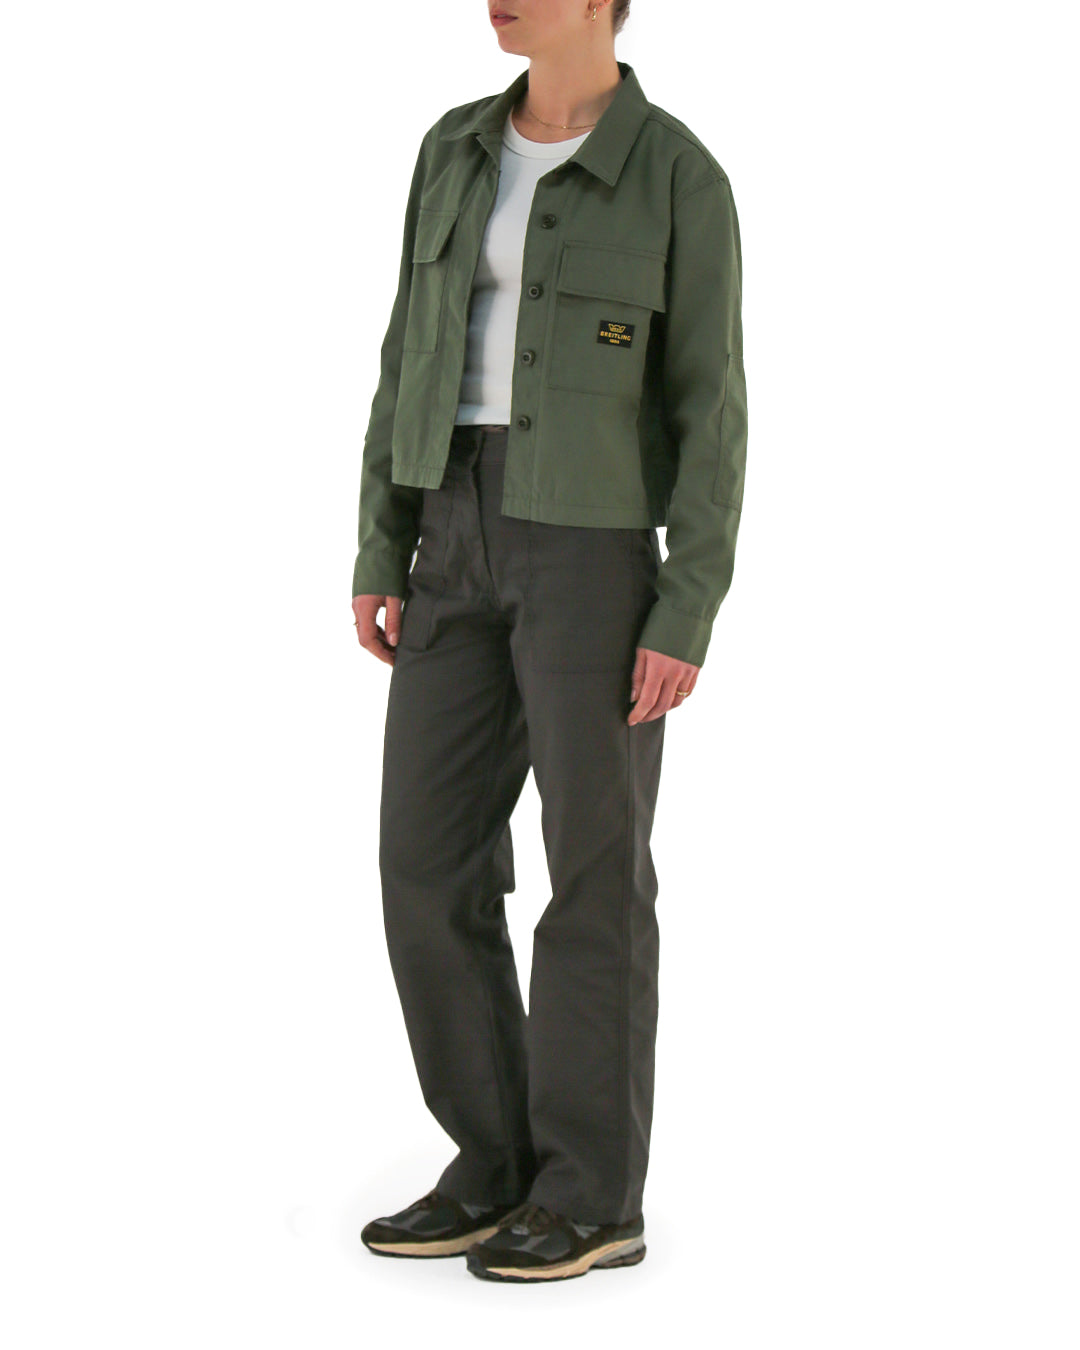 Top Time BDU Cropped Shirt - Lichen Green|Model